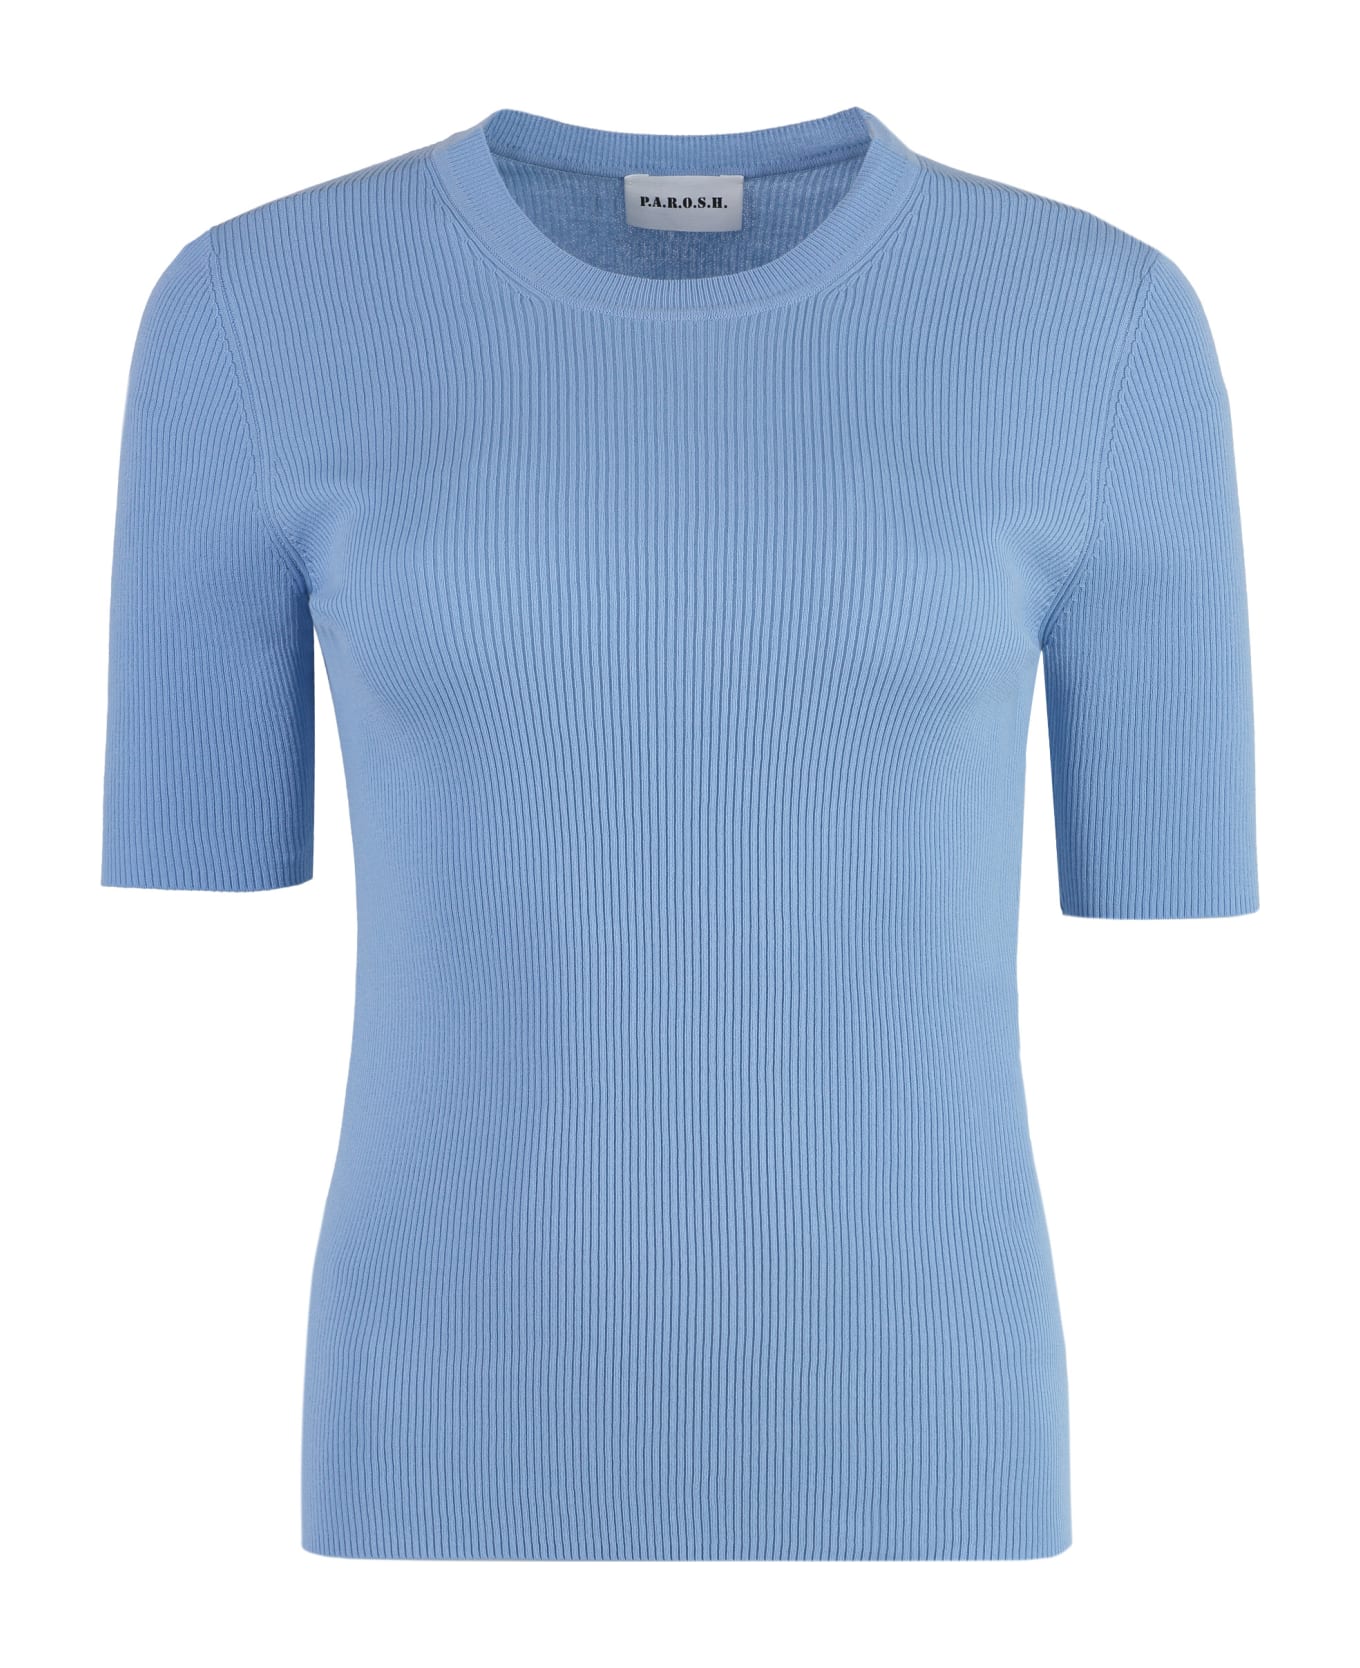 Parosh Cotton Knit T-shirt - Light Blue